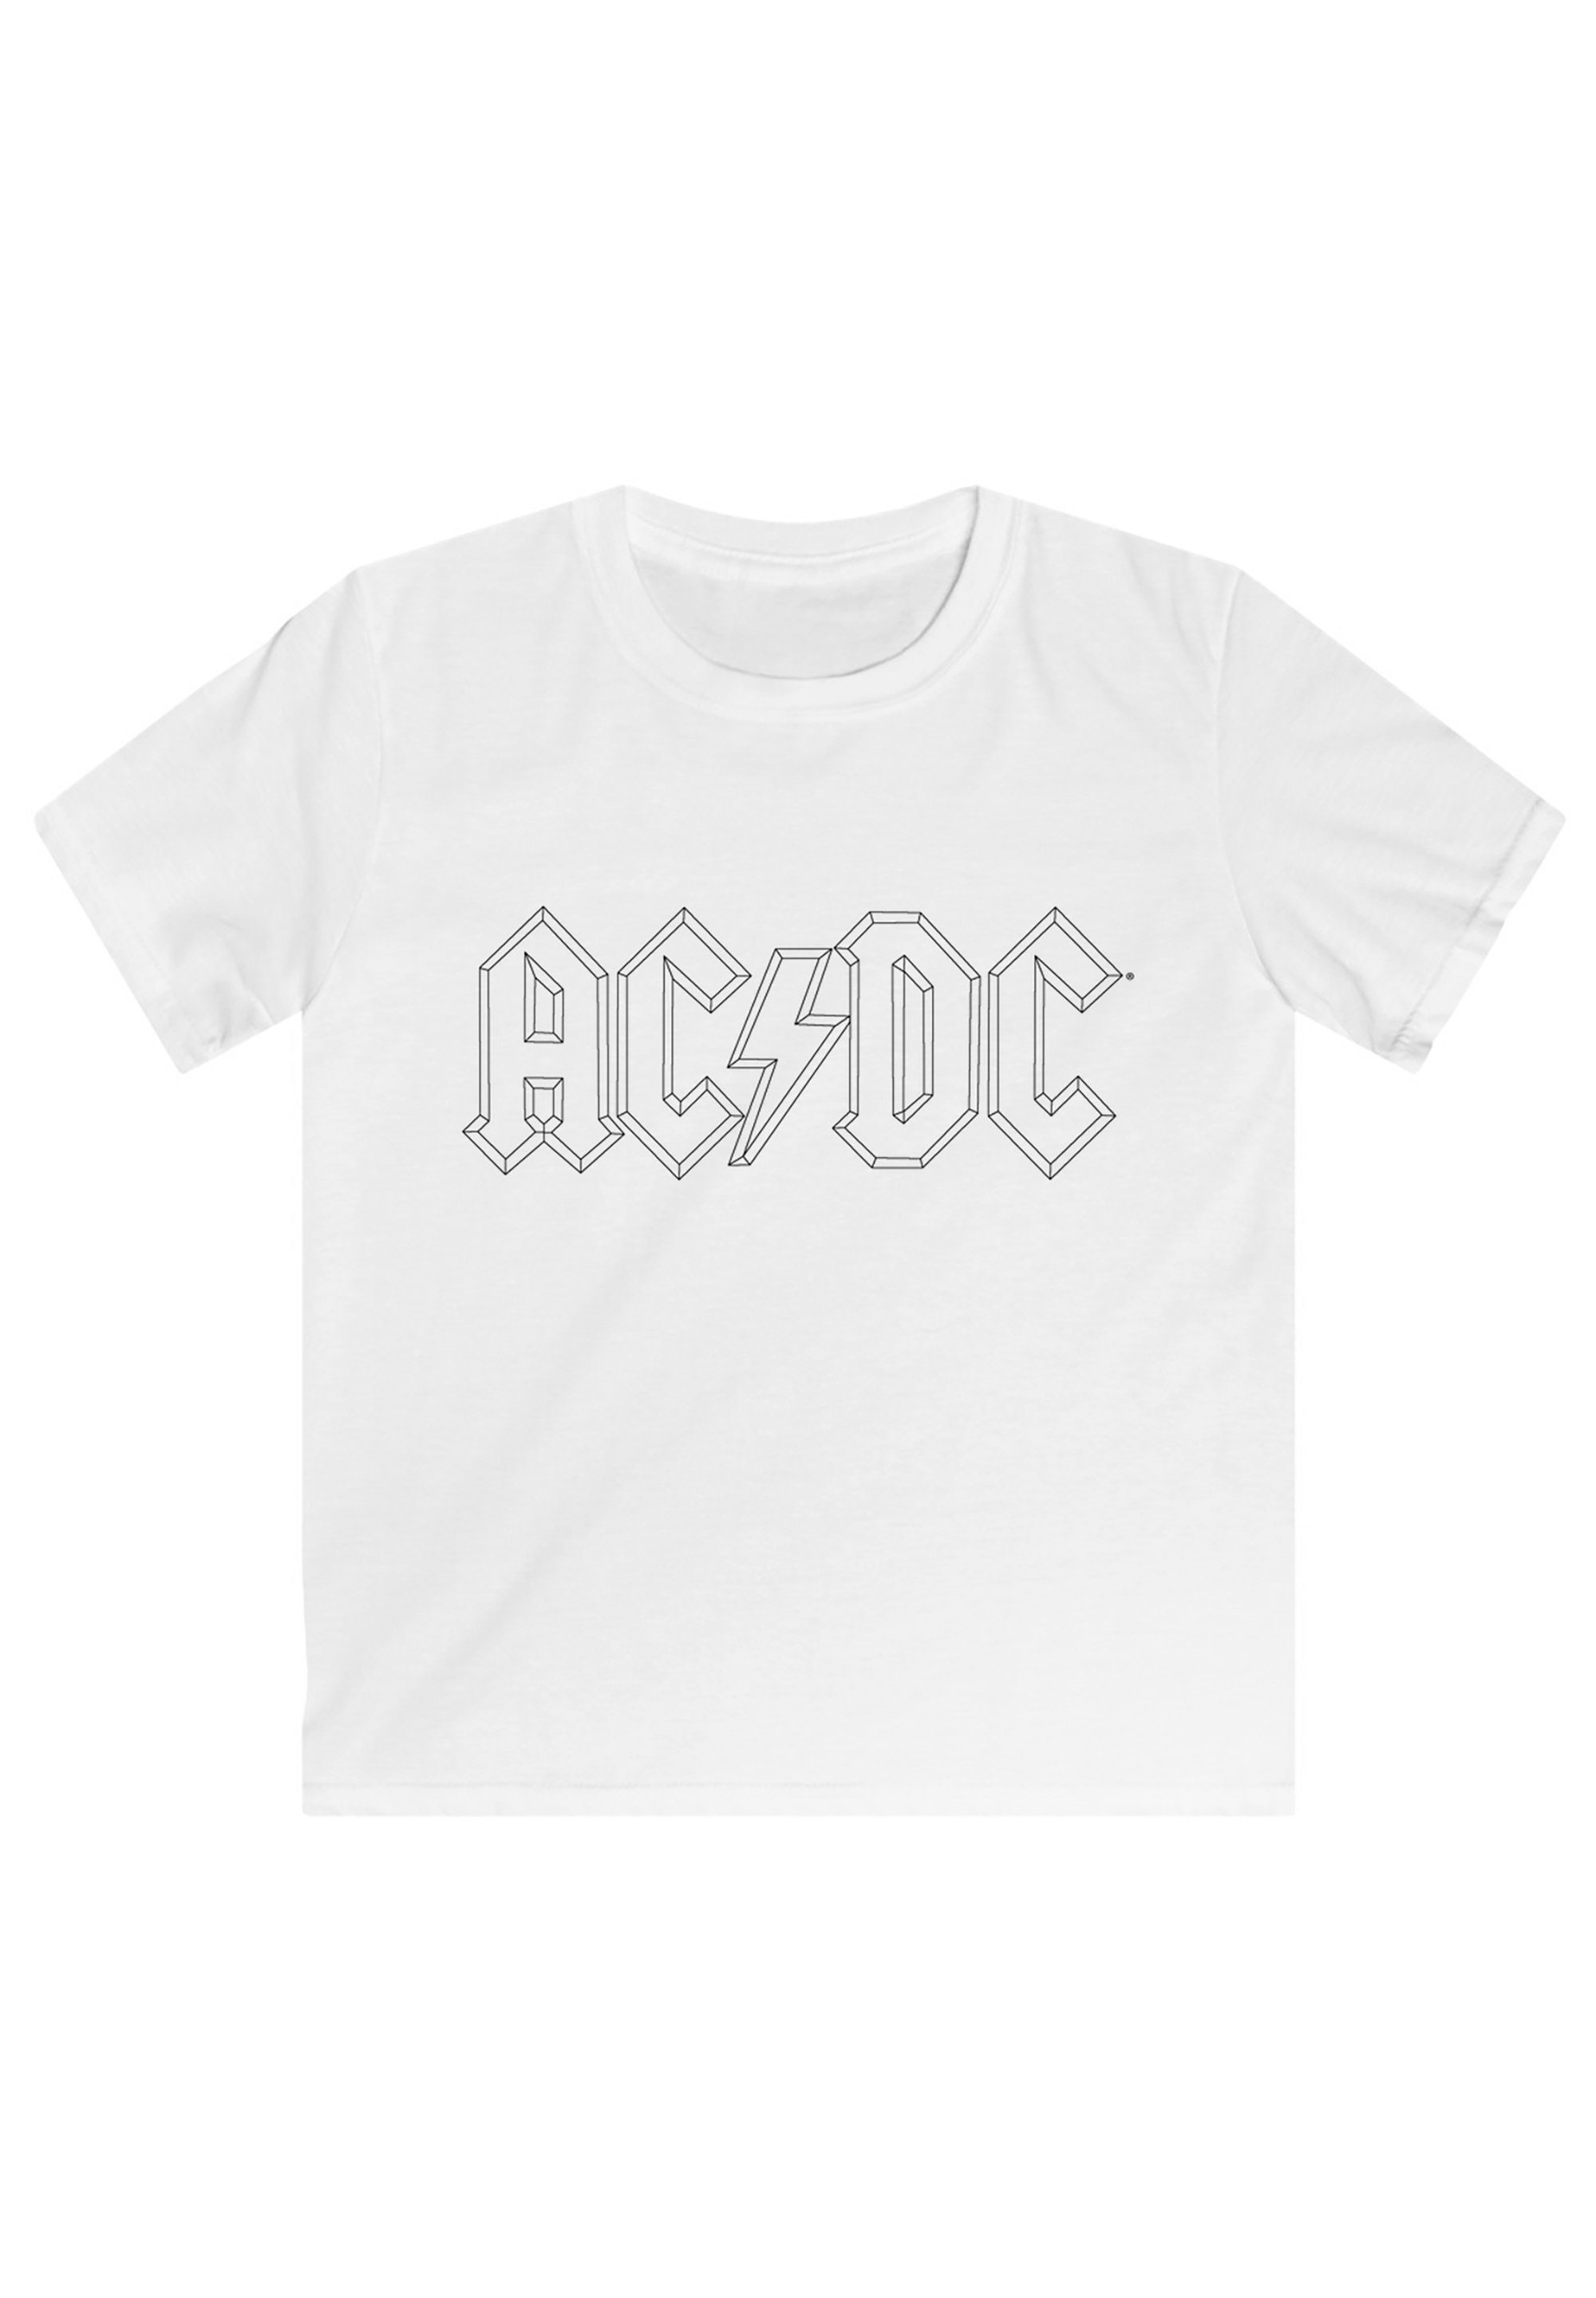 F4NT4STIC T-Shirt ACDC Black Merch,Jungen,Mädchen,Bandshirt Unisex Rock Outline Fan Kinder,Premium Musik Metal Premium Logo Merch 